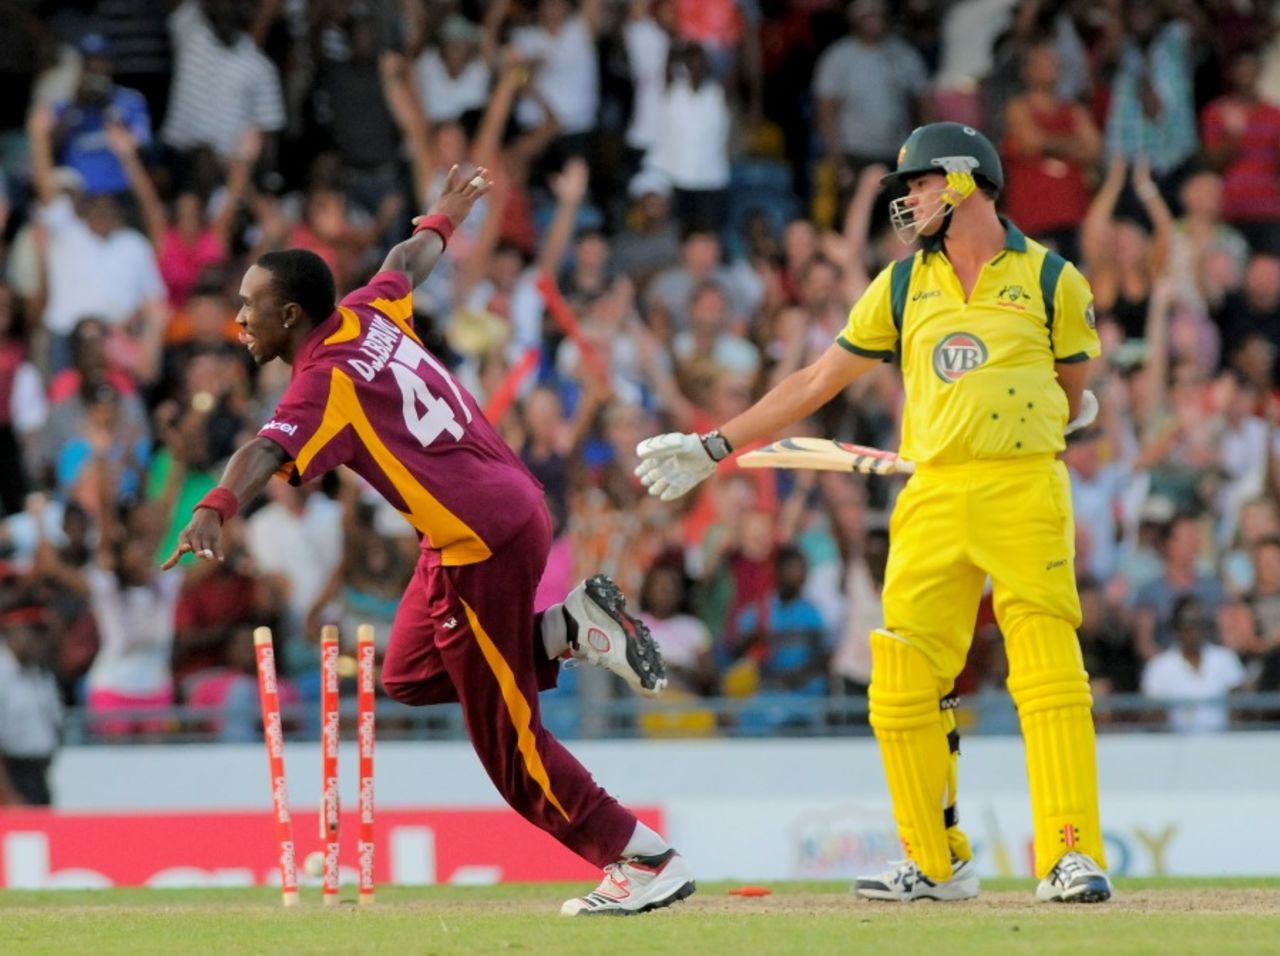 Dwayne Bravo celebrates after bowling Clint McKay, West Indies v Australia, 2nd Twenty20, Bridgetown, March 30, 2012